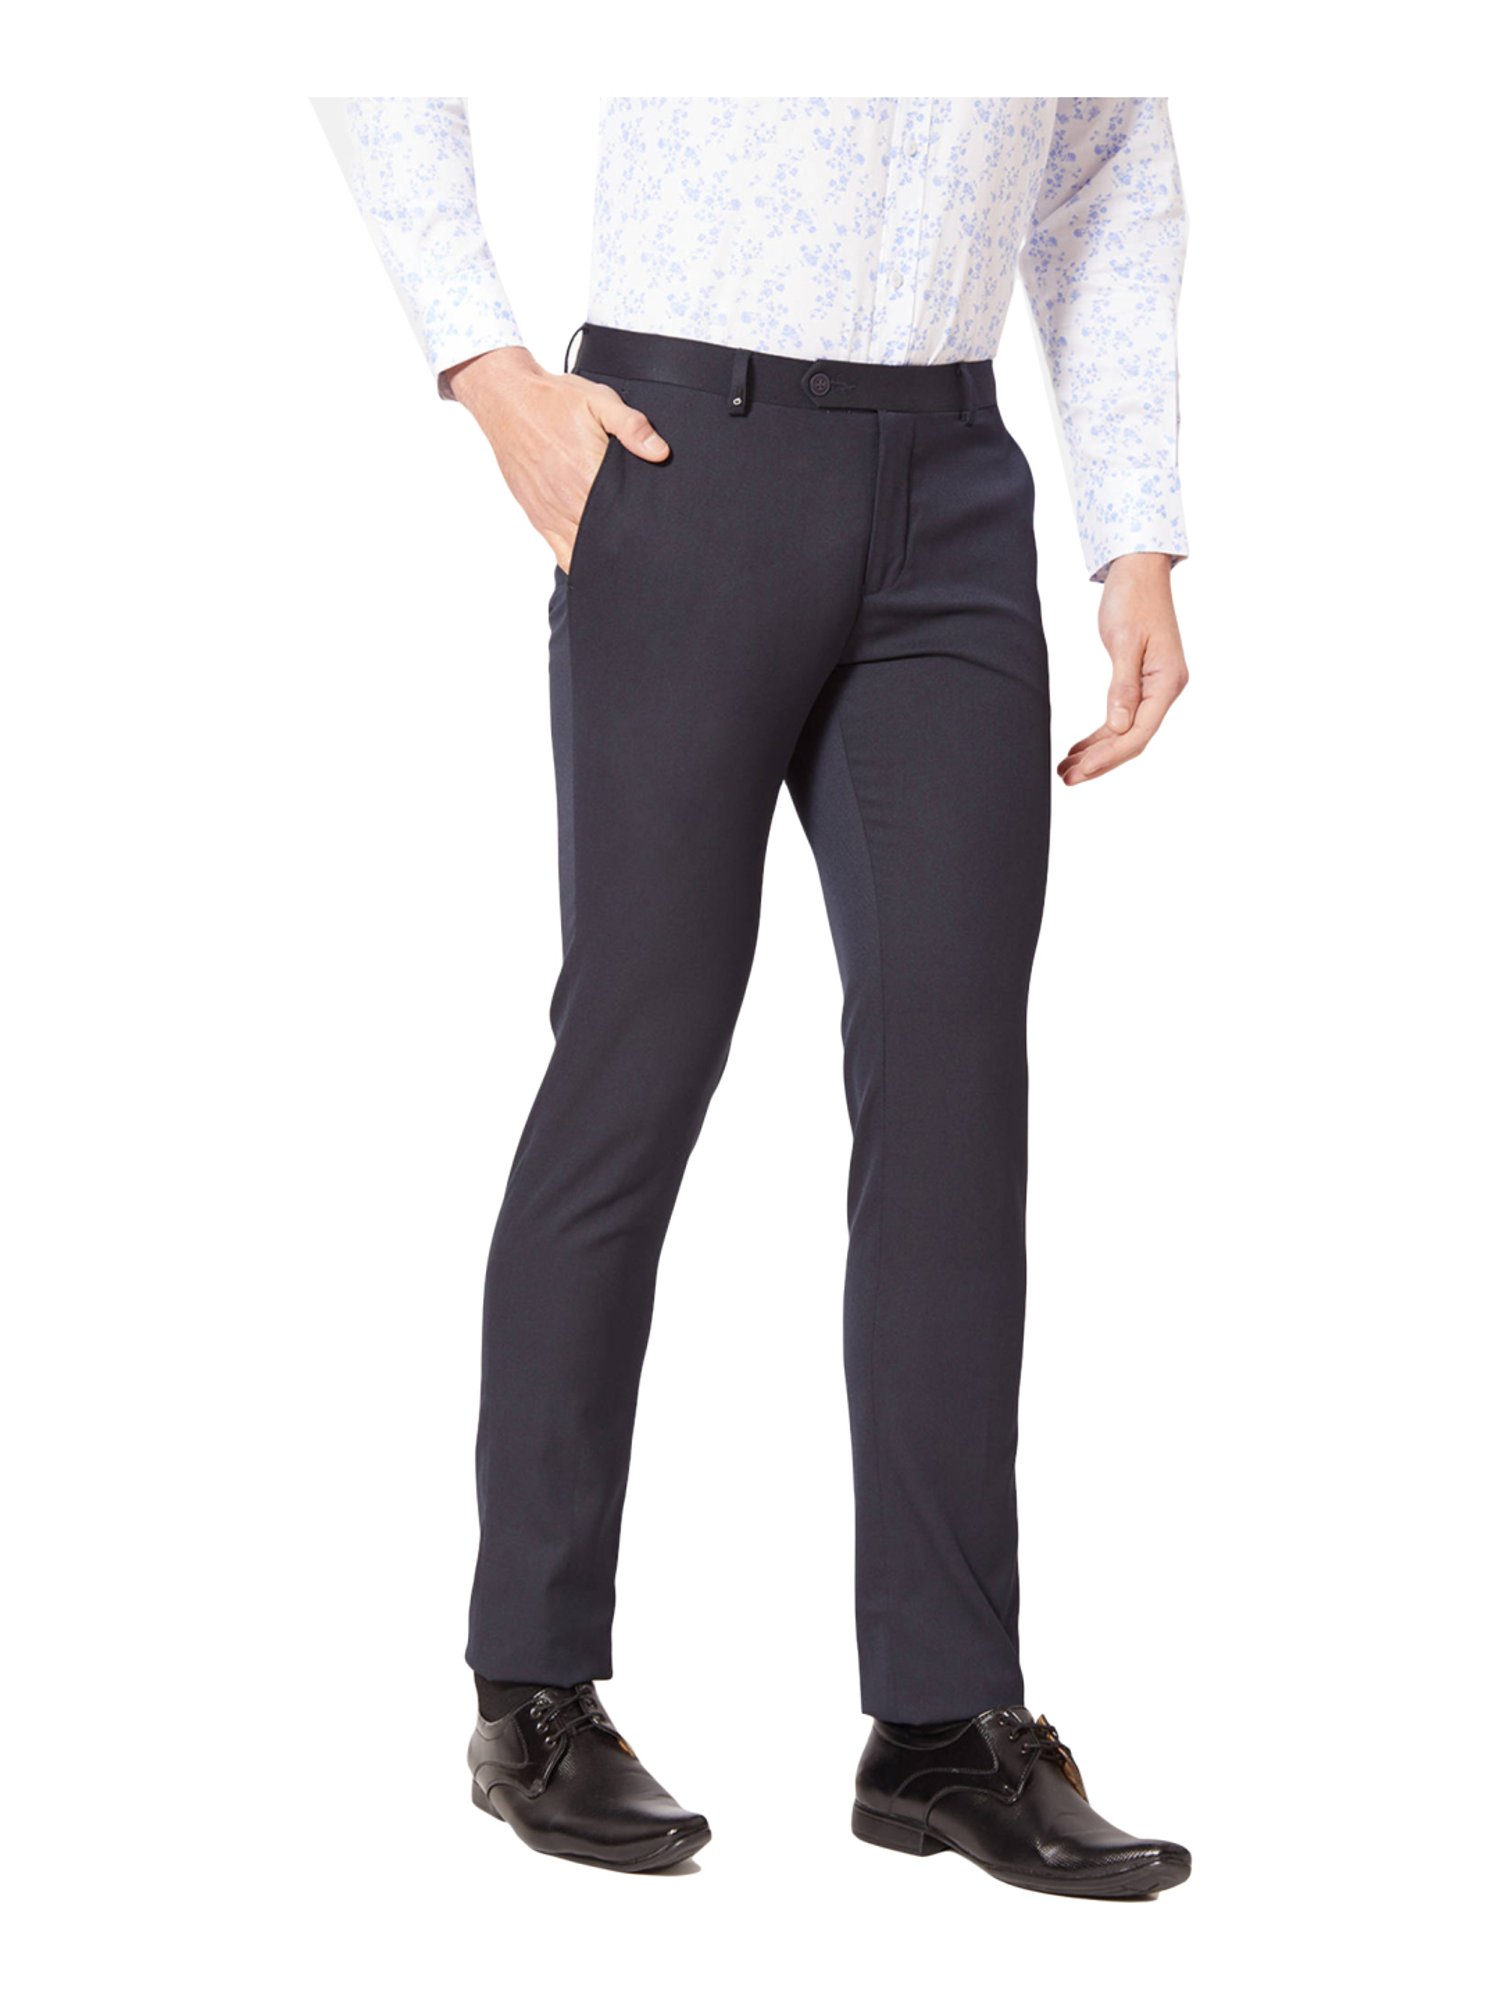 Buy Black Trousers  Pants for Men by OXEMBERG Online  Ajiocom